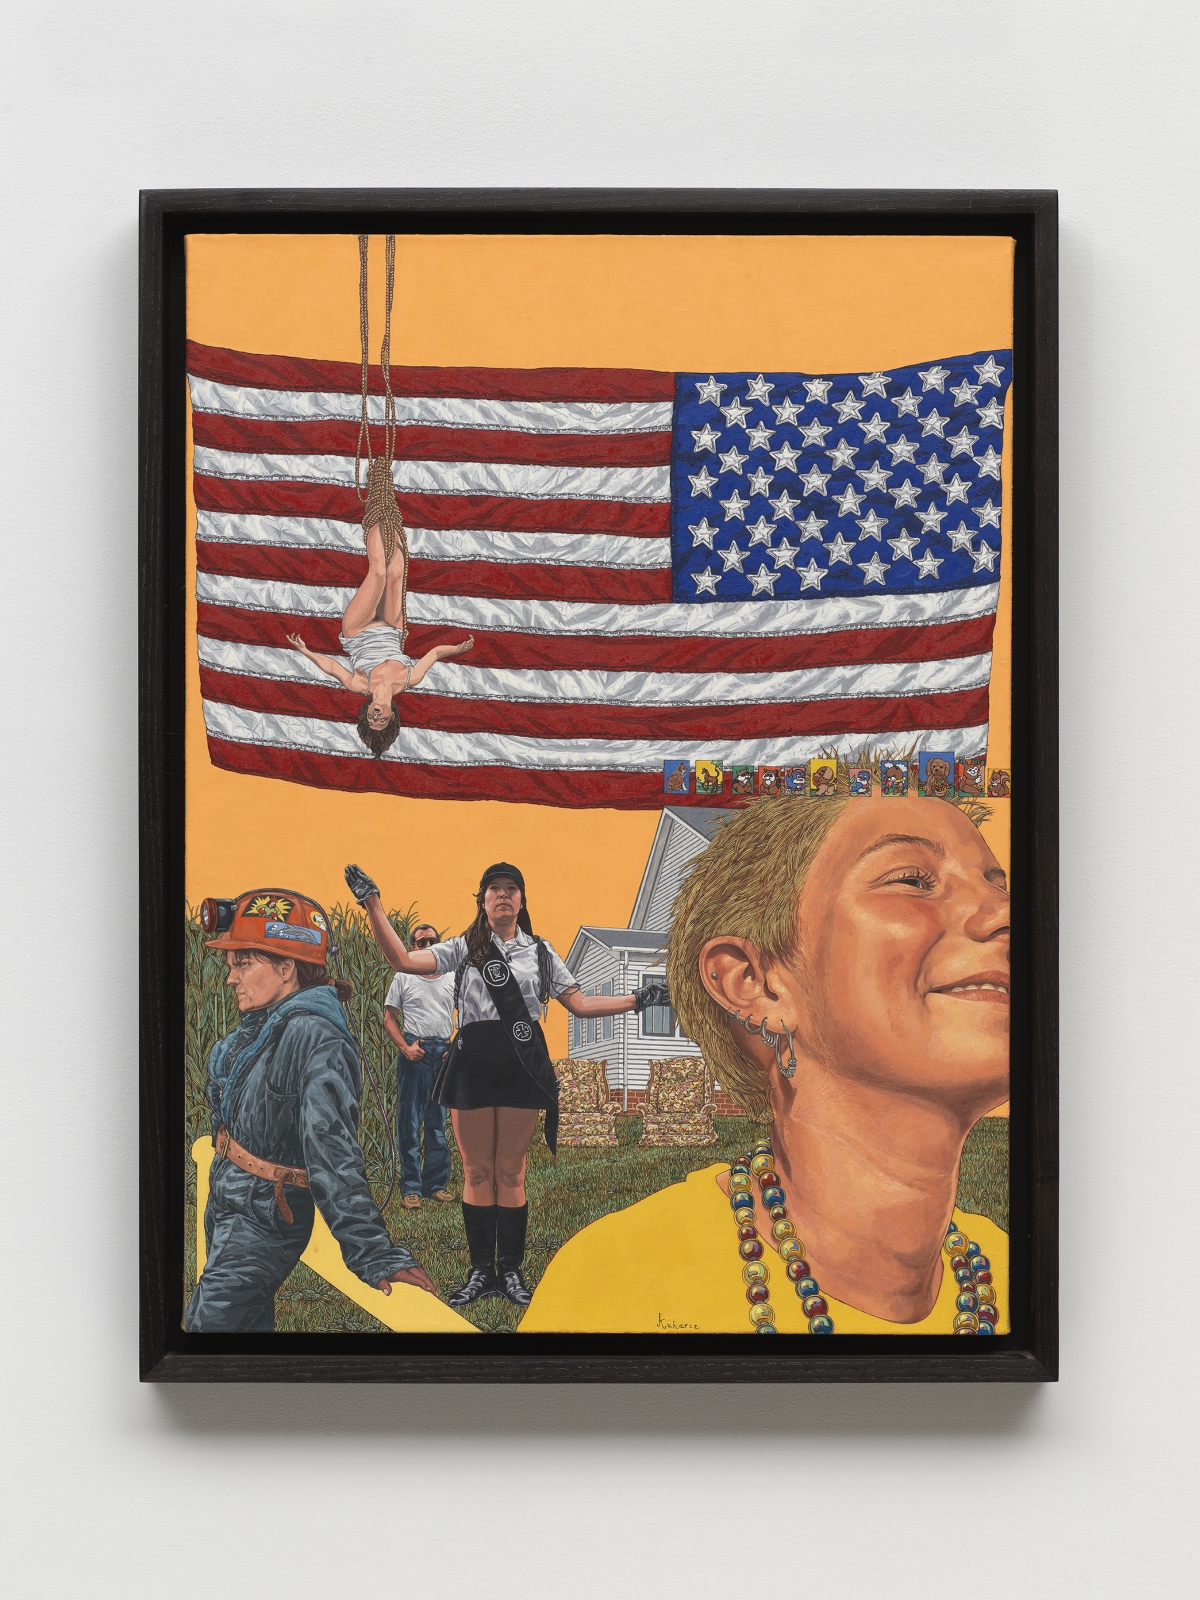 Katharine Kuharic
Backwards Flag, 1998
oil on linen
26 x 20 ins.
66 x 50.8 cm